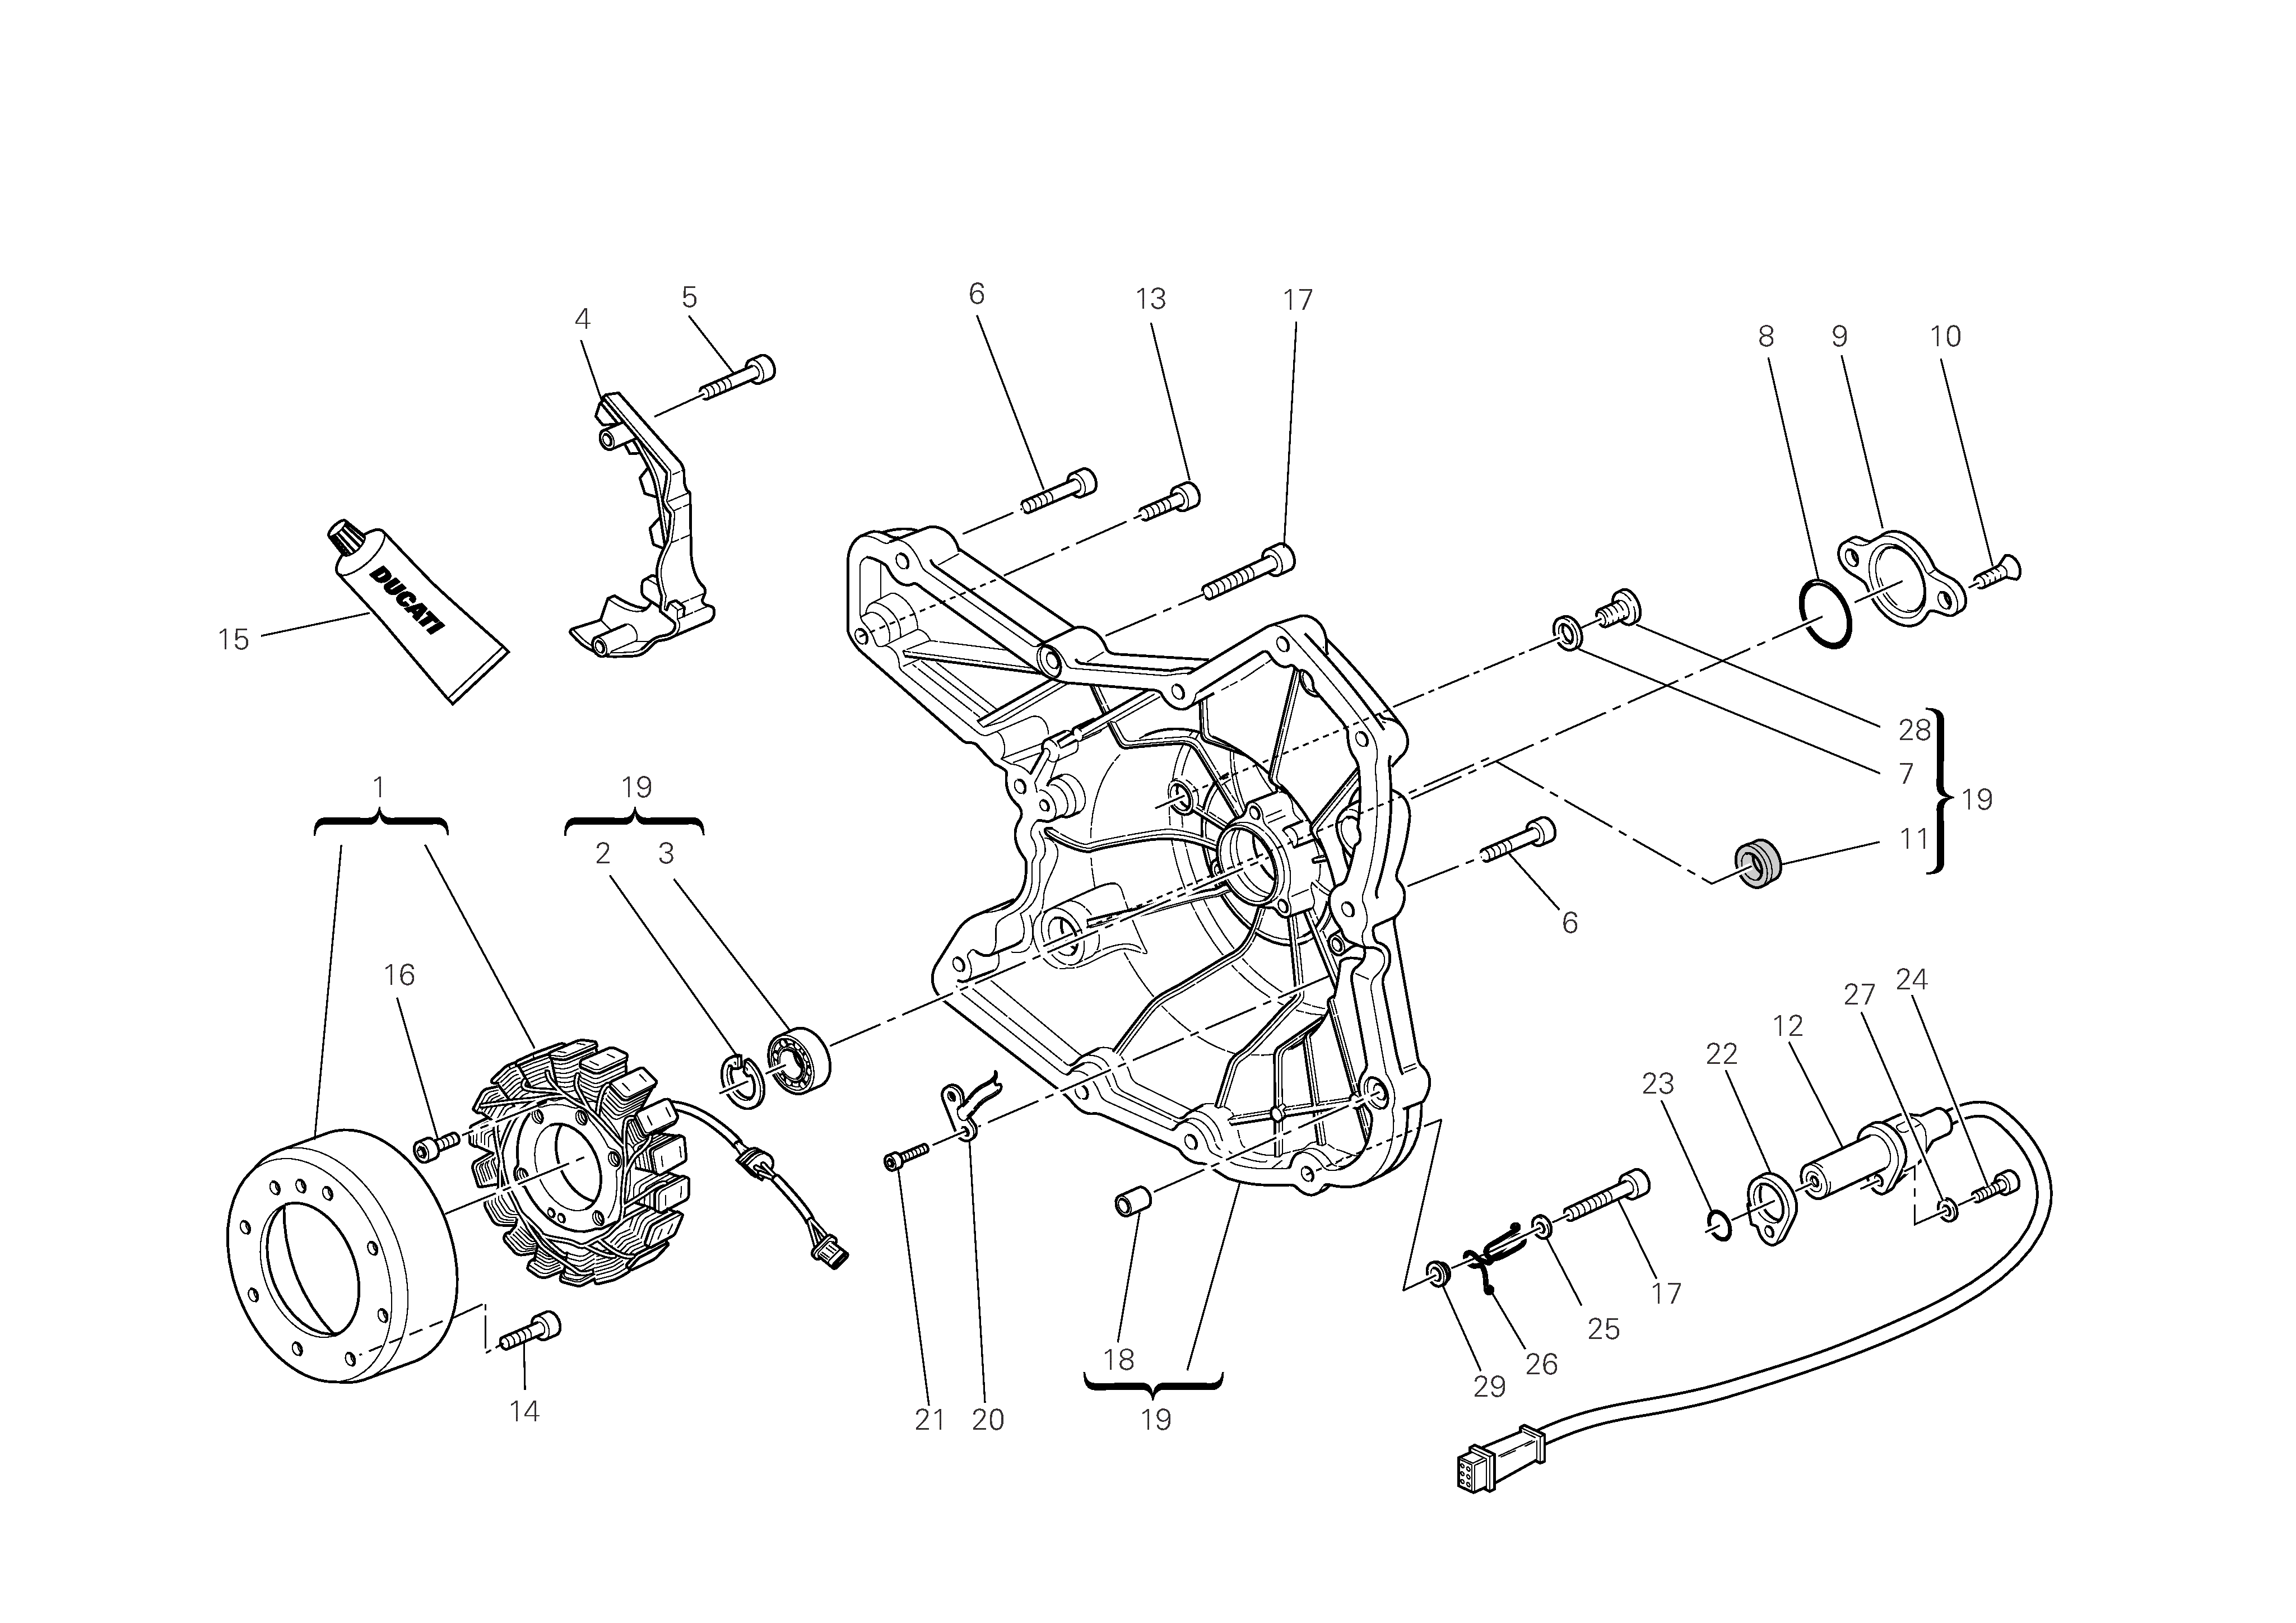 Alternator-side crankcasecover